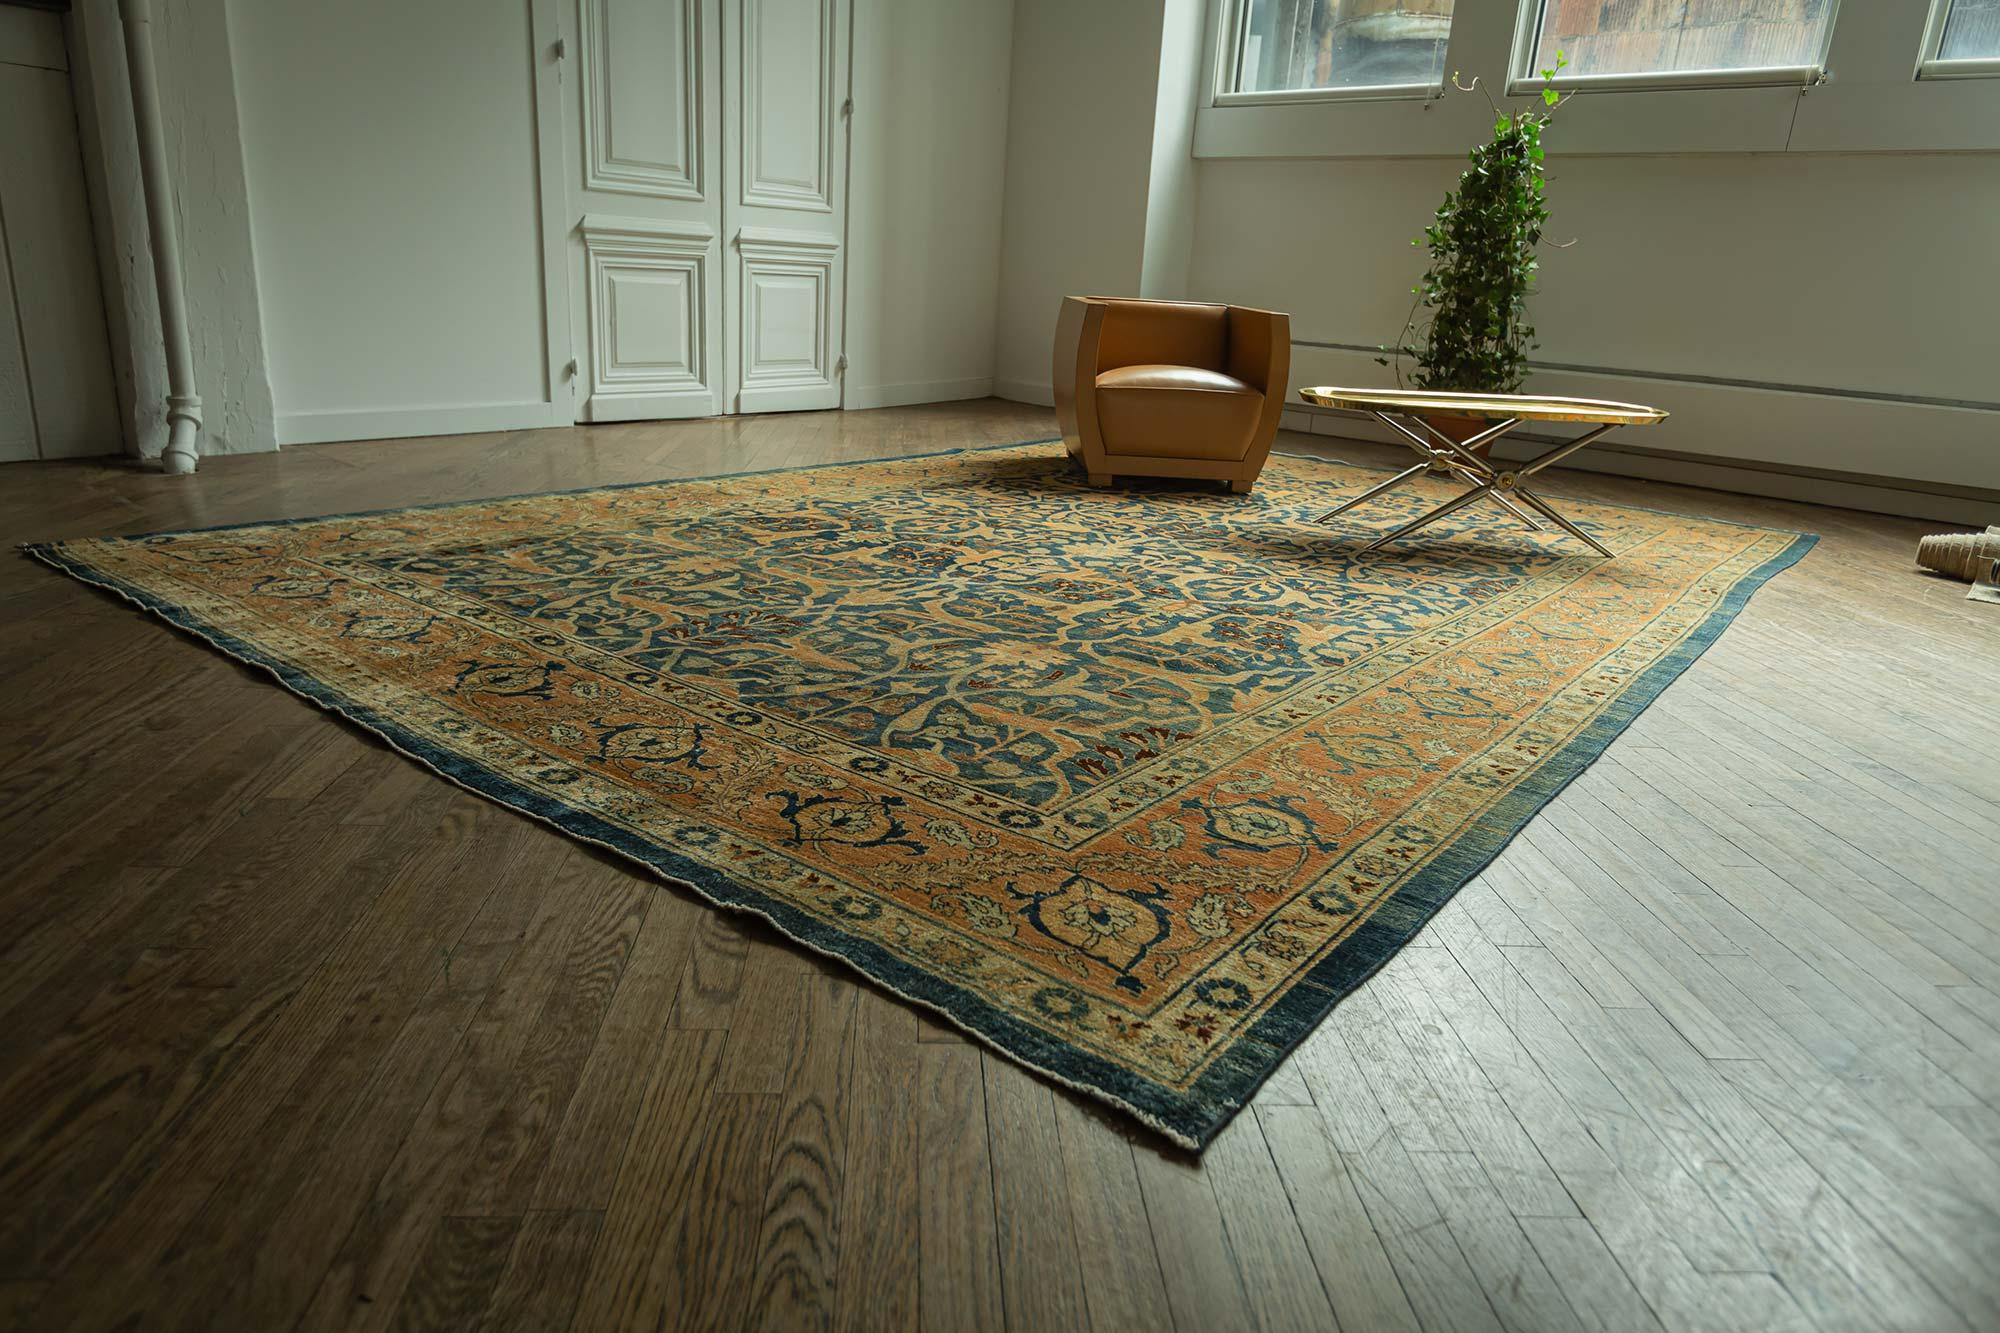 Authentic Persian Tabriz Handmade Wool Carpet
Size: 9'2